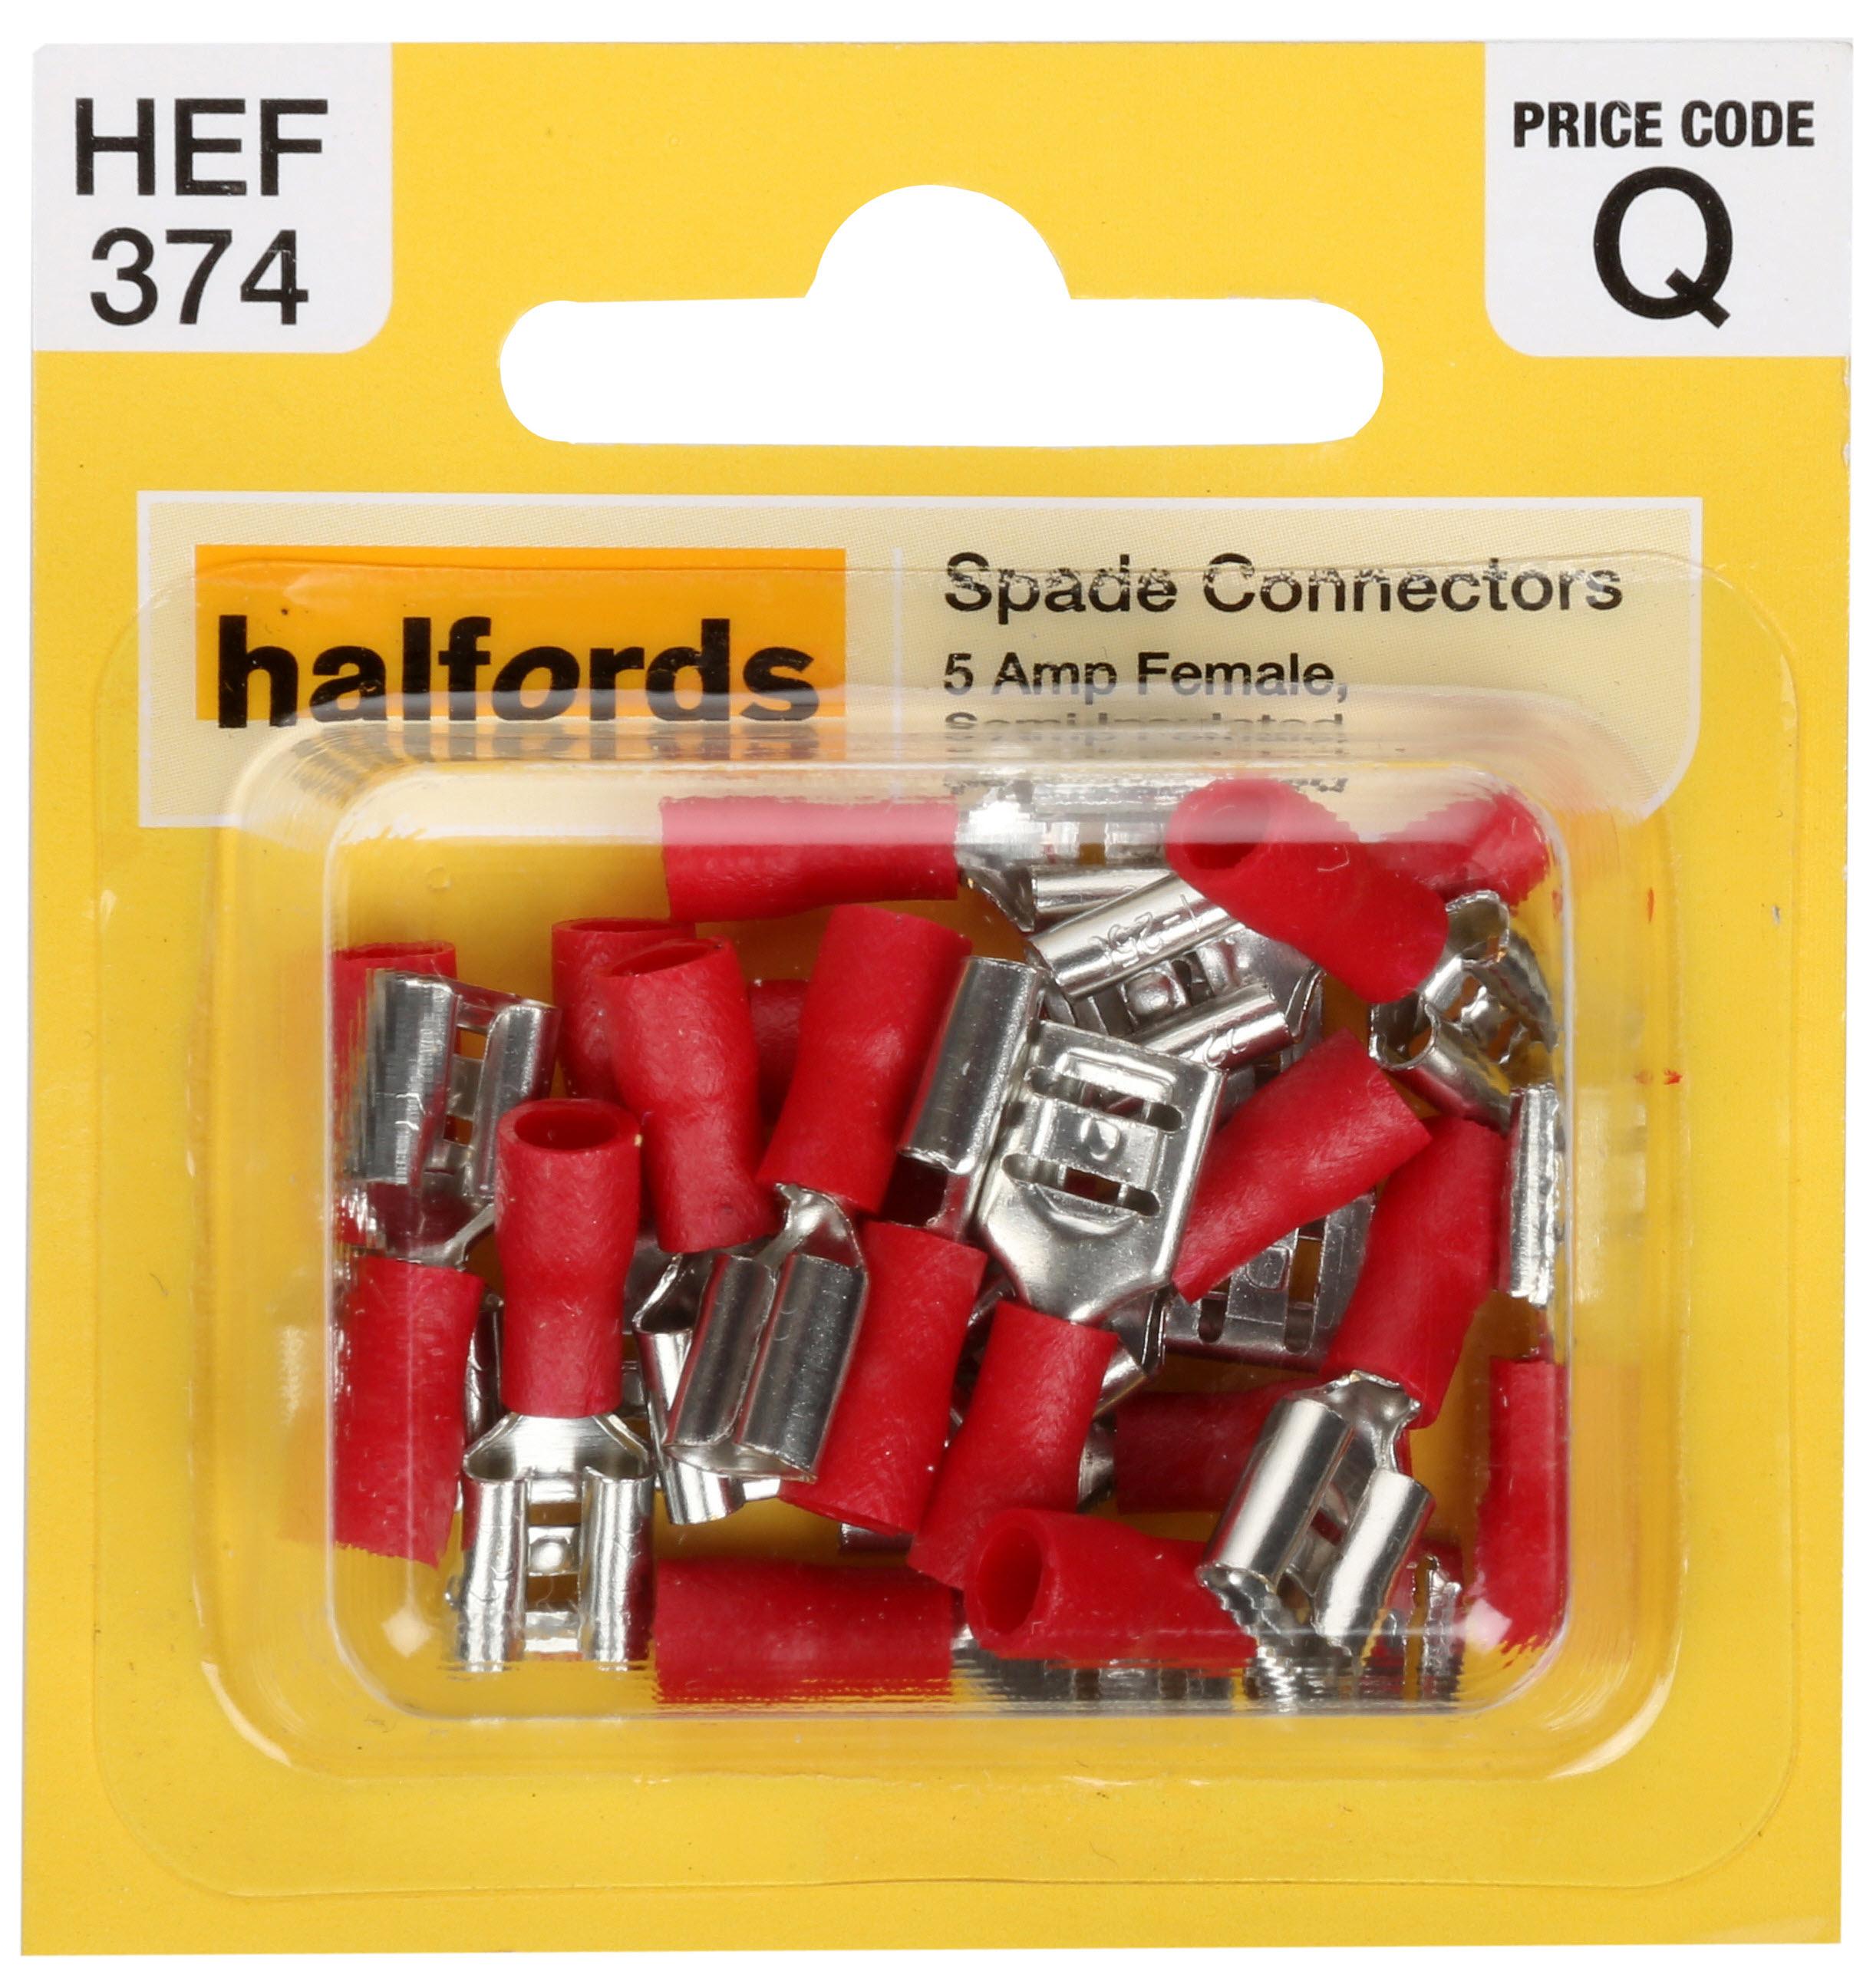 Halfords Spade Connectors 5 Amp Female Semi-Insulated Hef374